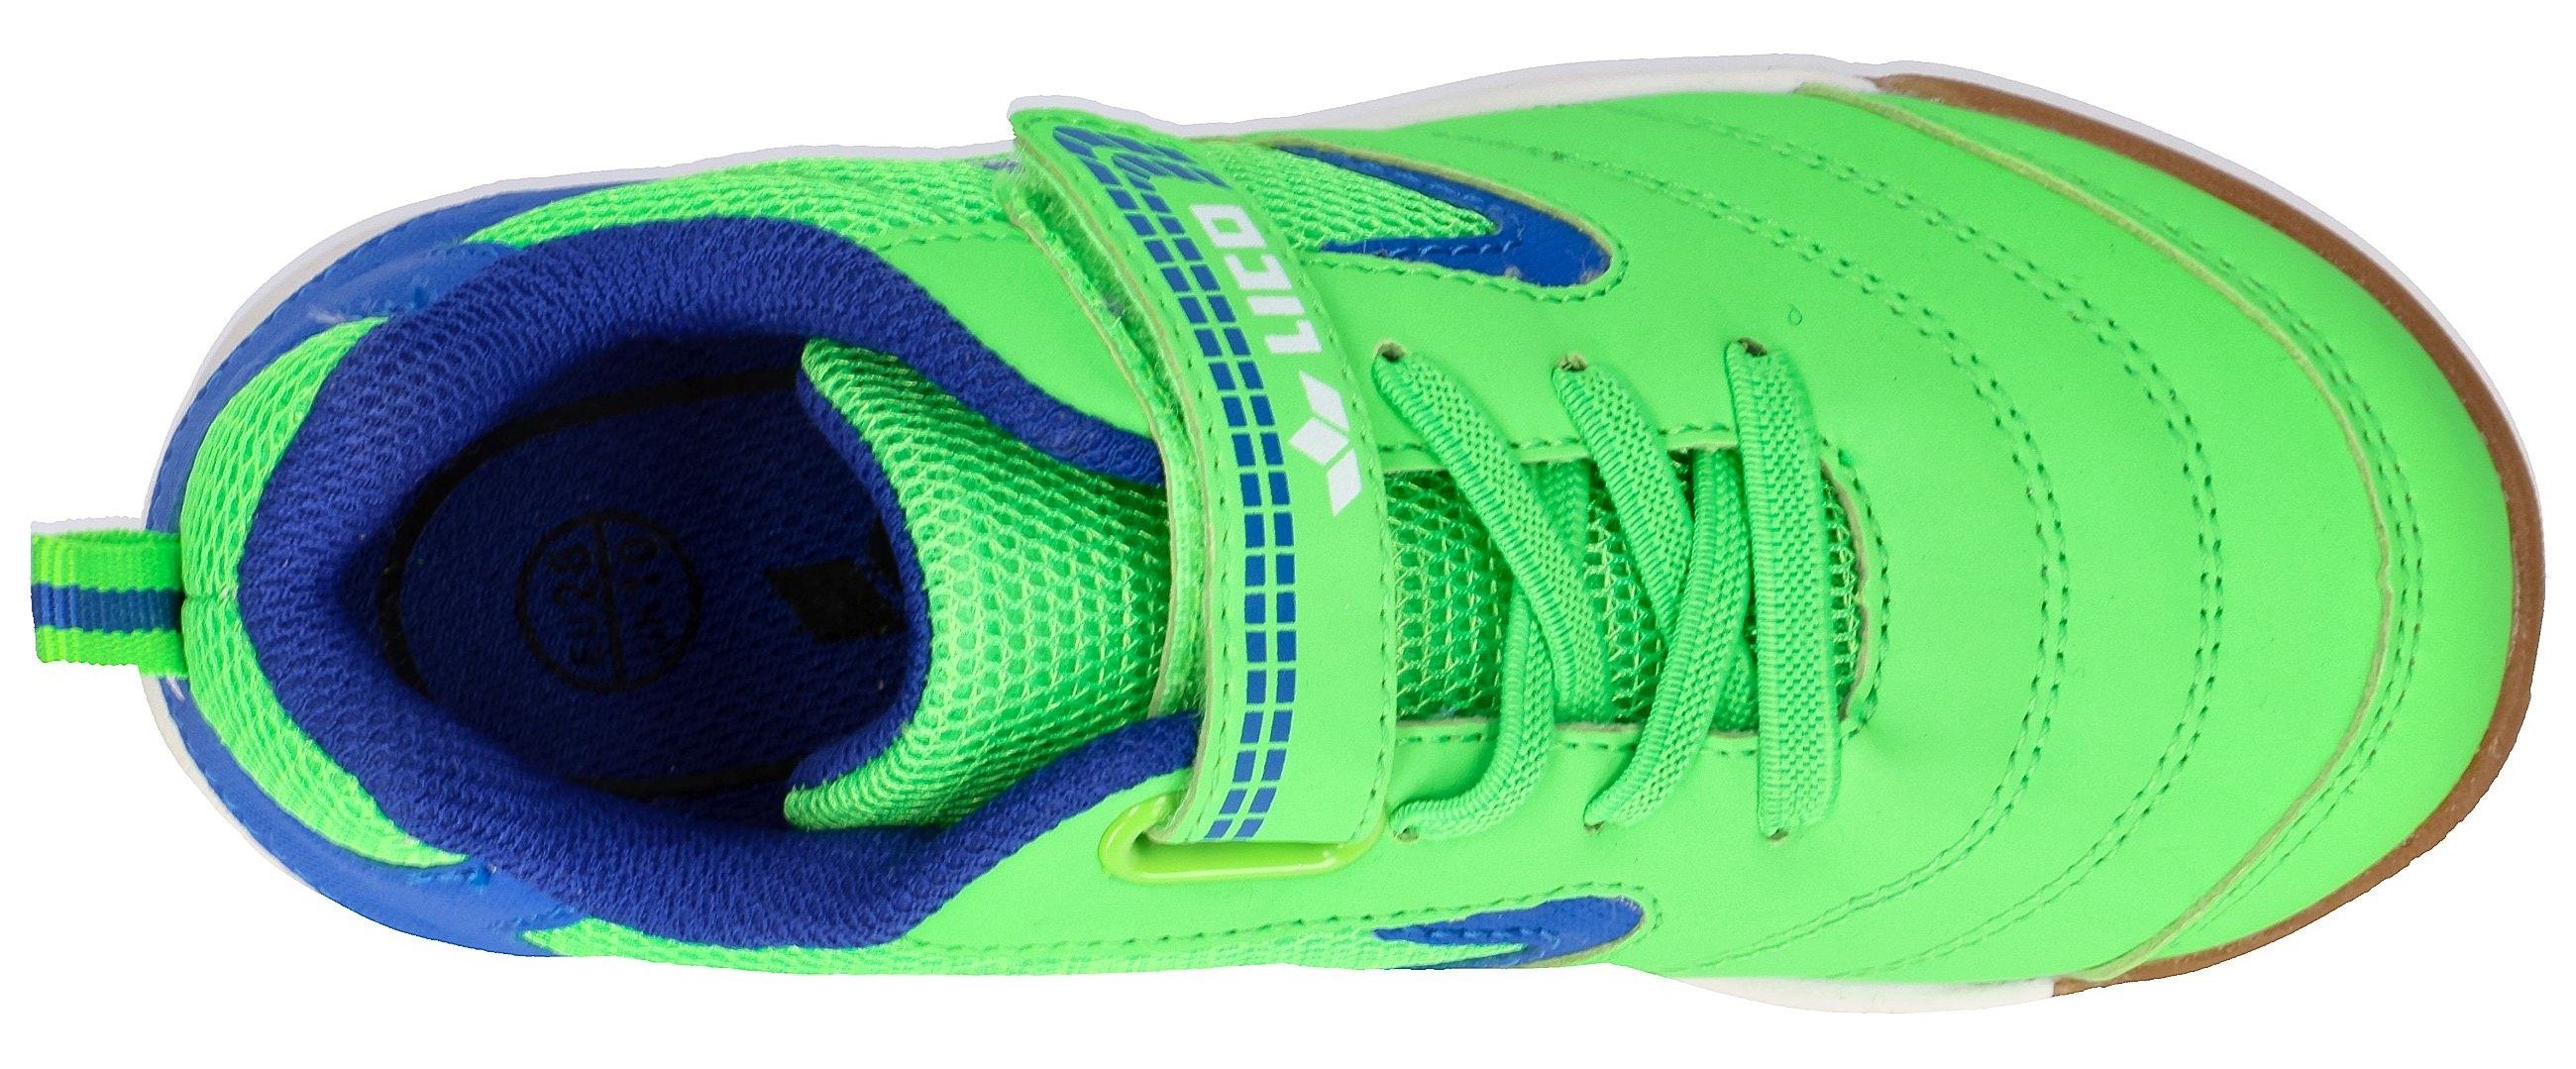 Sneaker Ari WMS VS Laufsohle Lico heller mit grün-blau